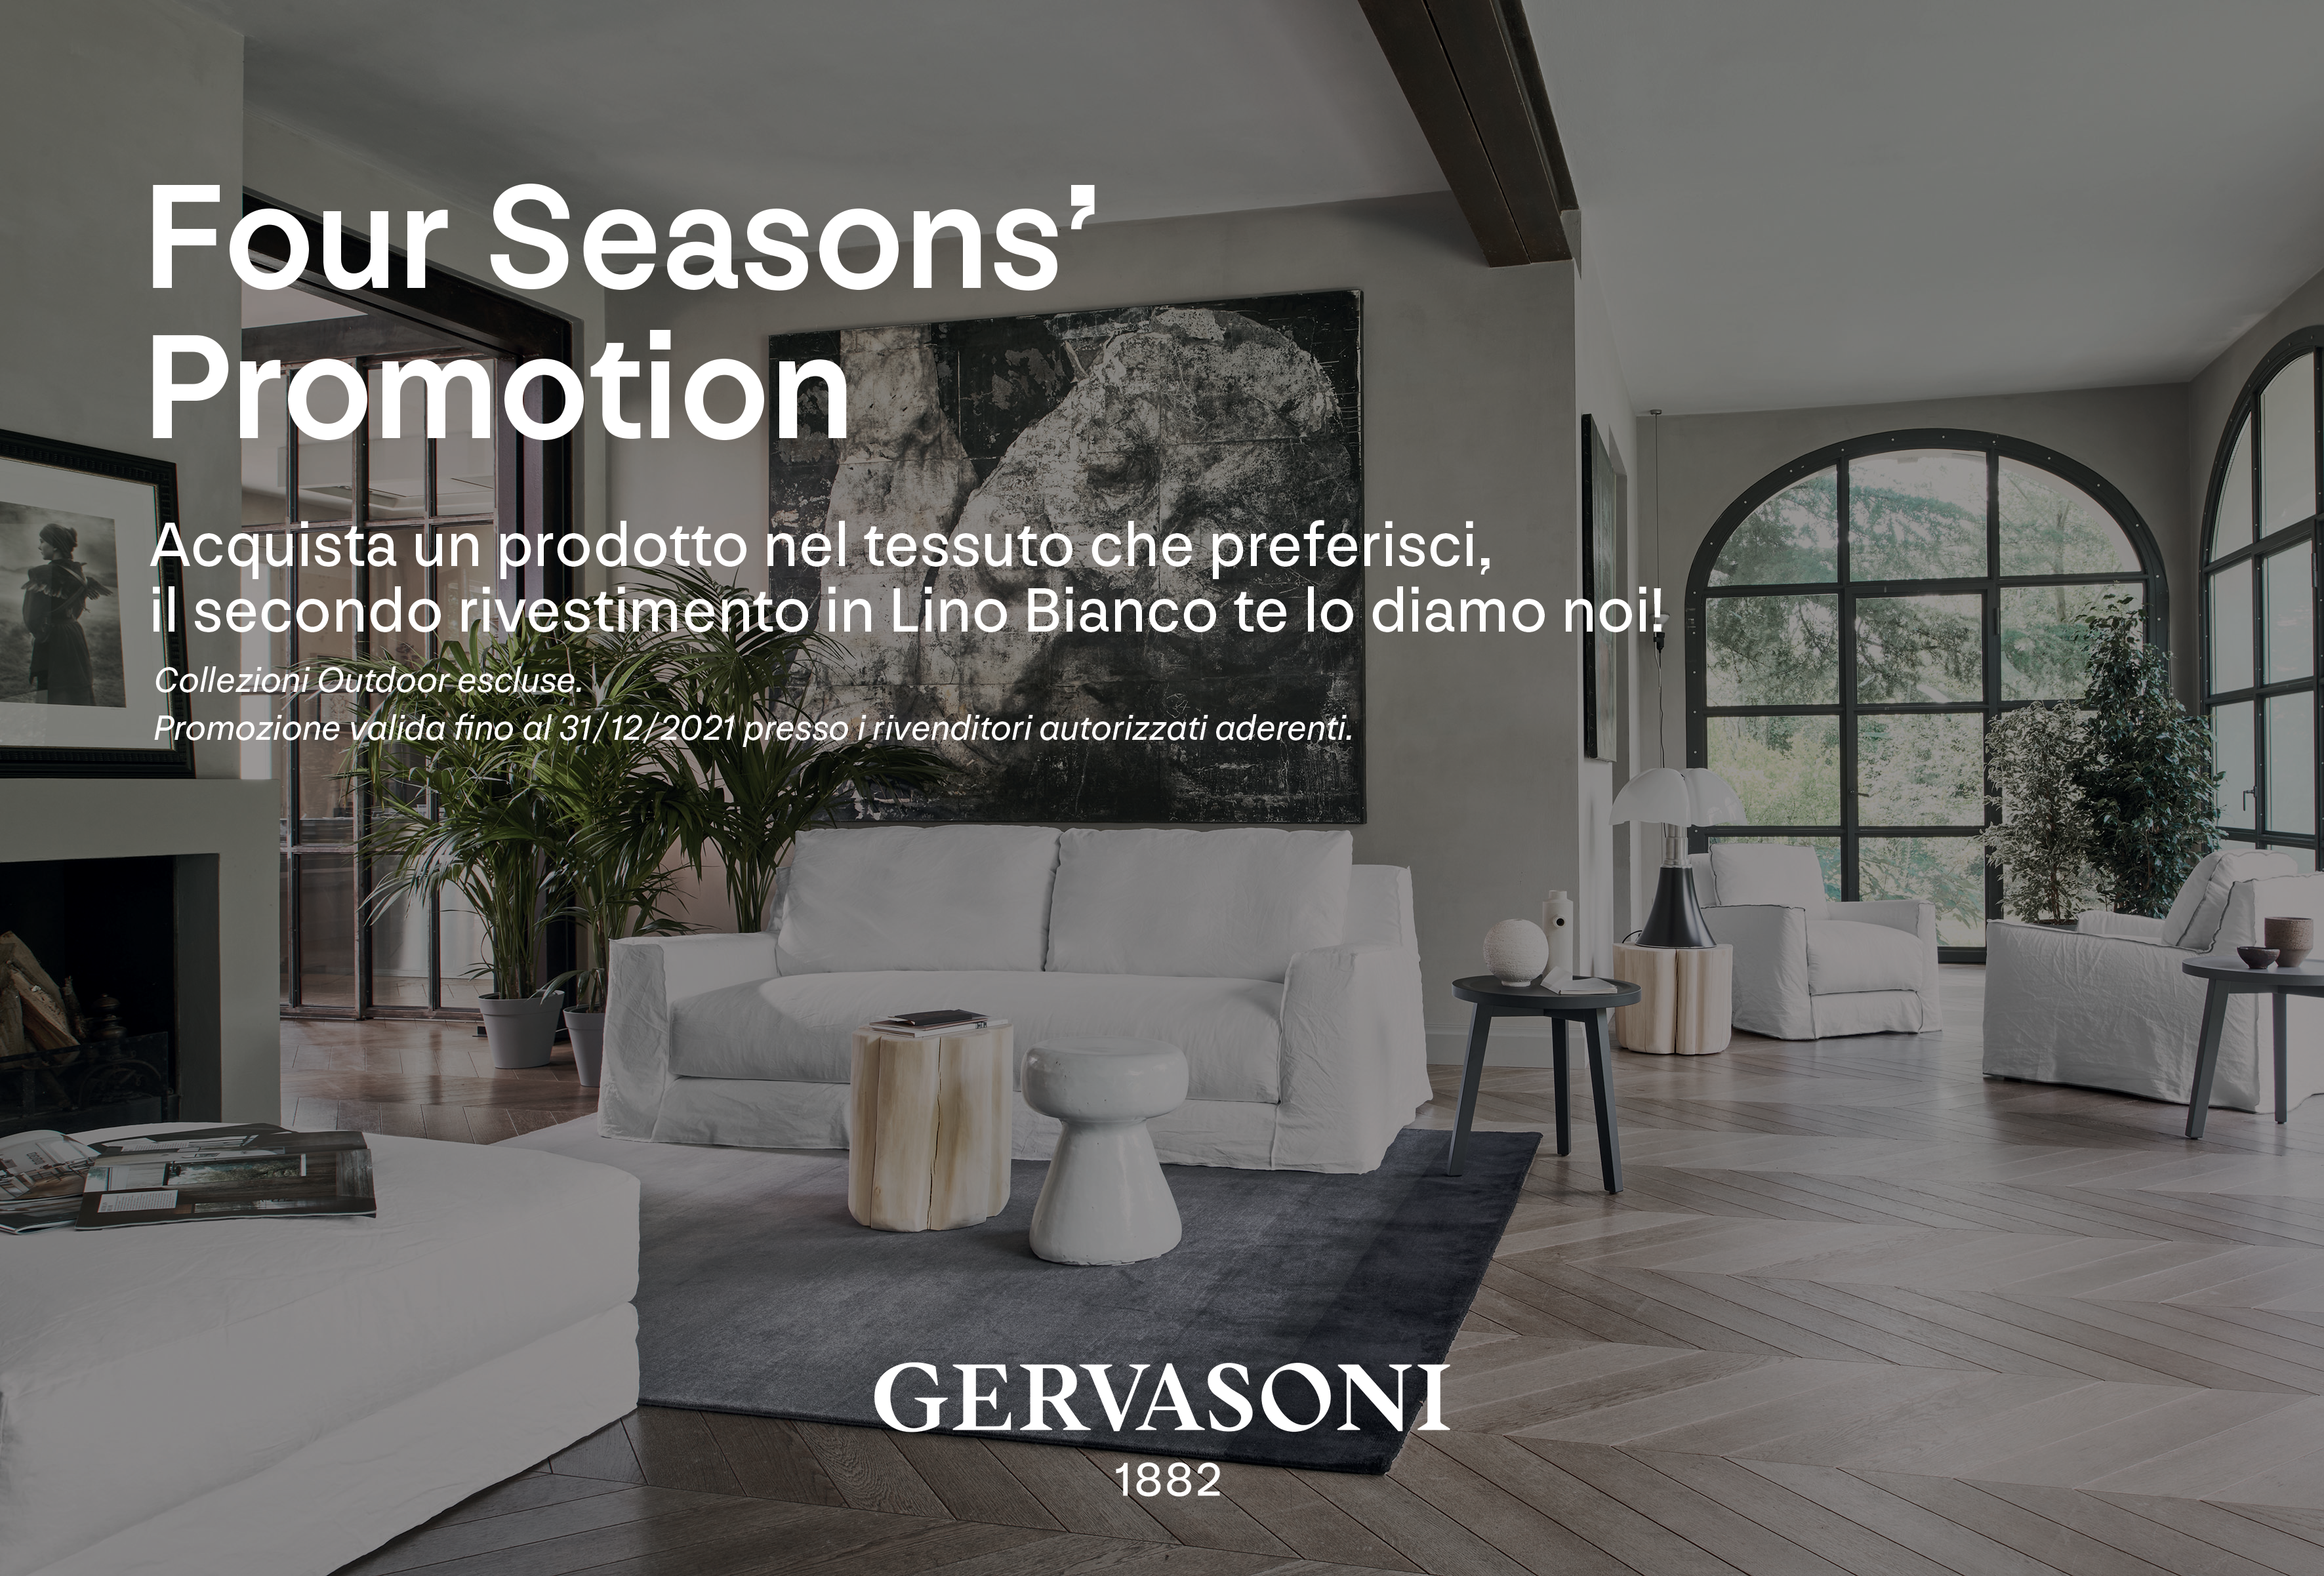 promozione four seasons gervasoni